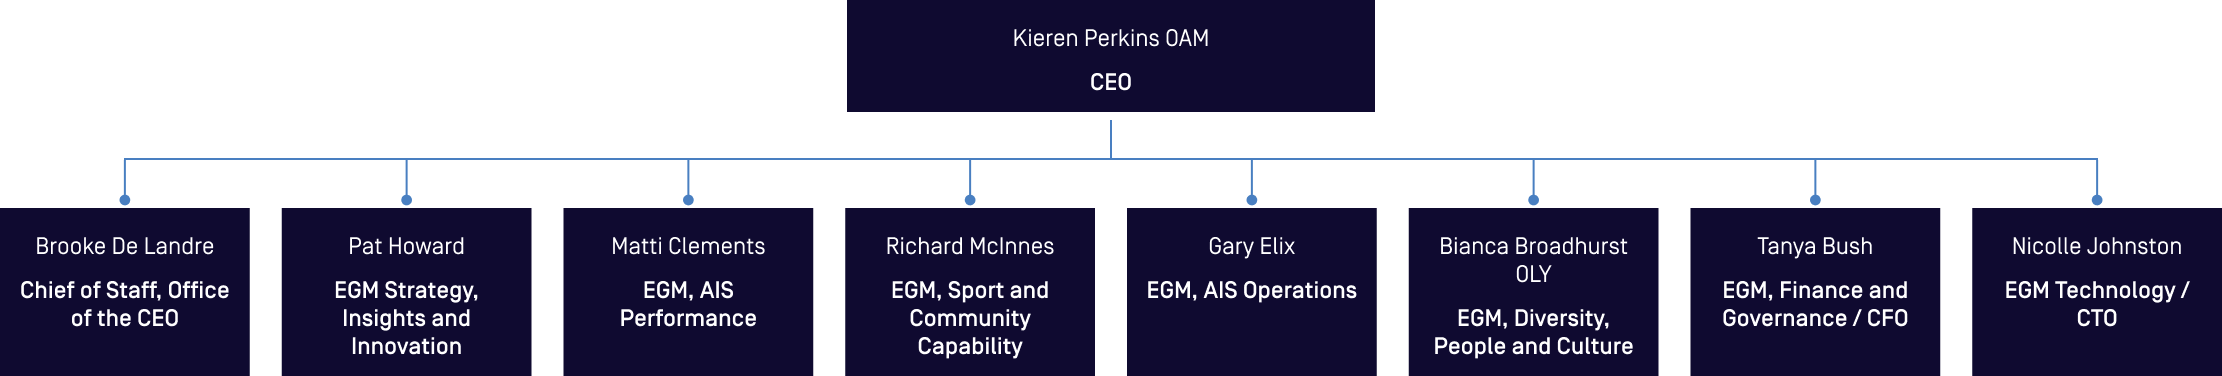 Organisational Chart - Top level